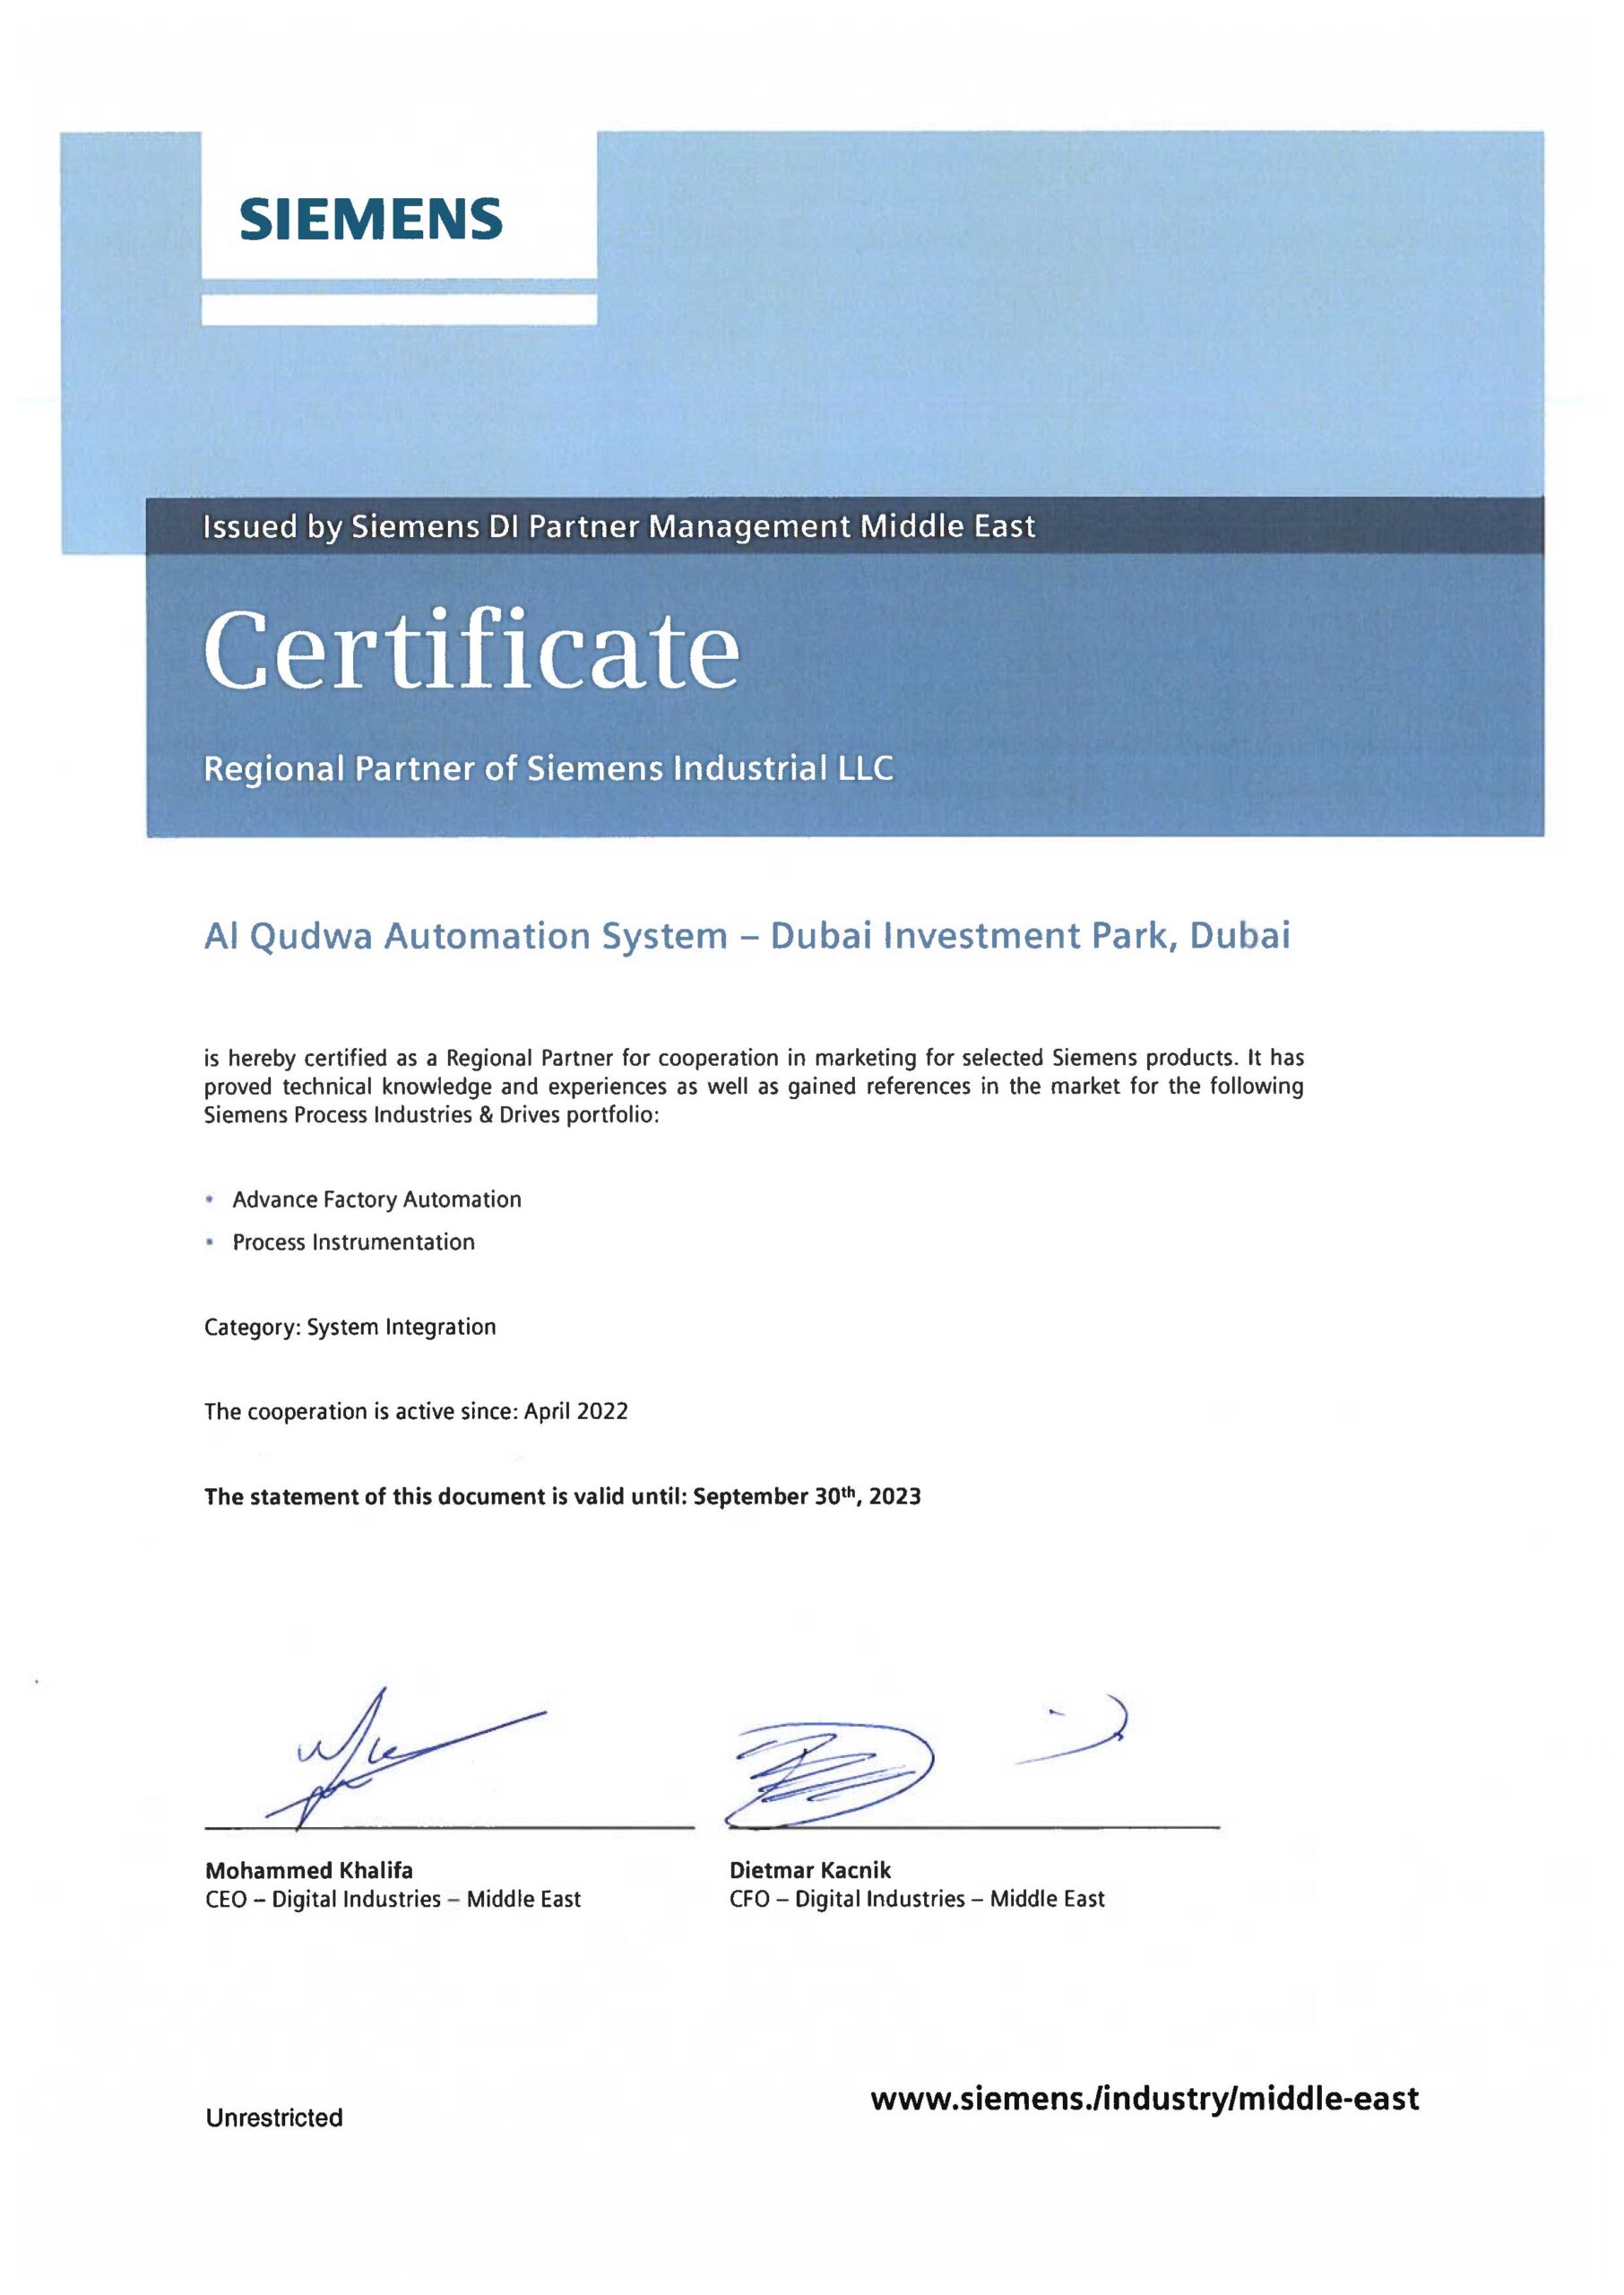 Al Qudwa Partner Certificate scaled